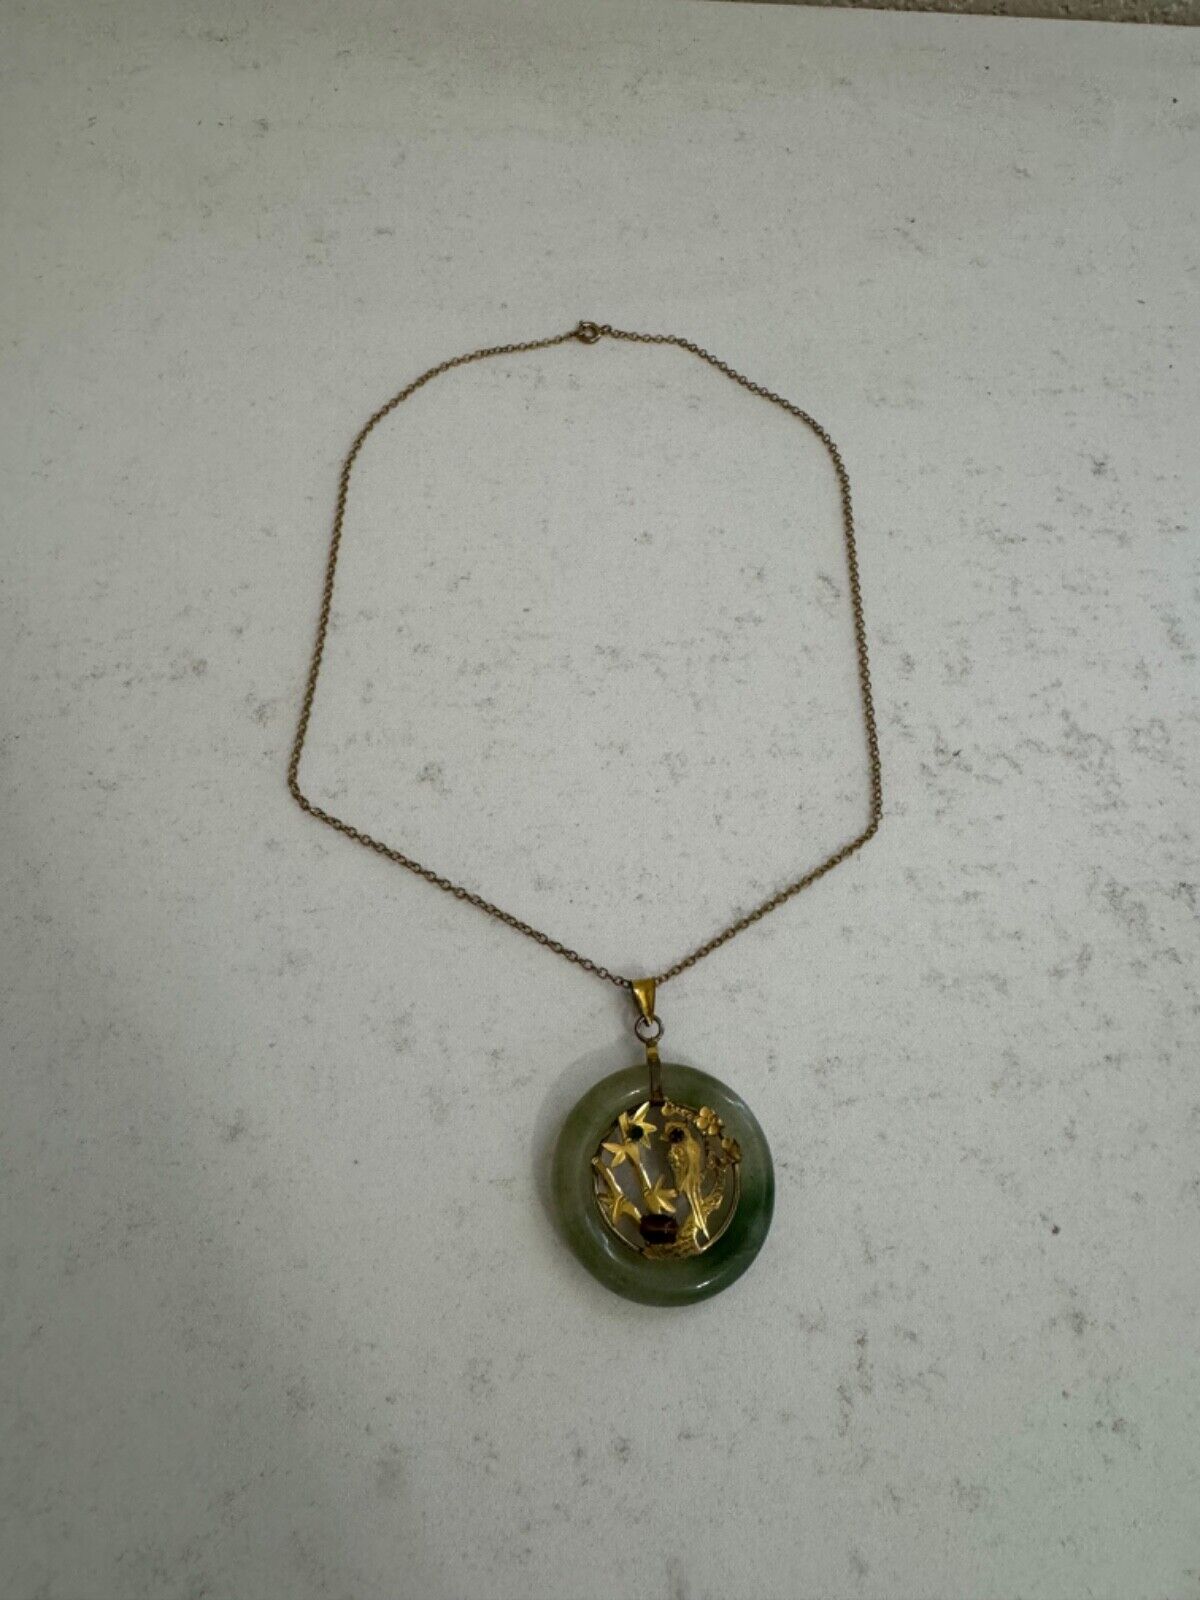 Vintage Chinese Jade or Hardstone & Gold Tone Metal Pendant Necklace Bird Design